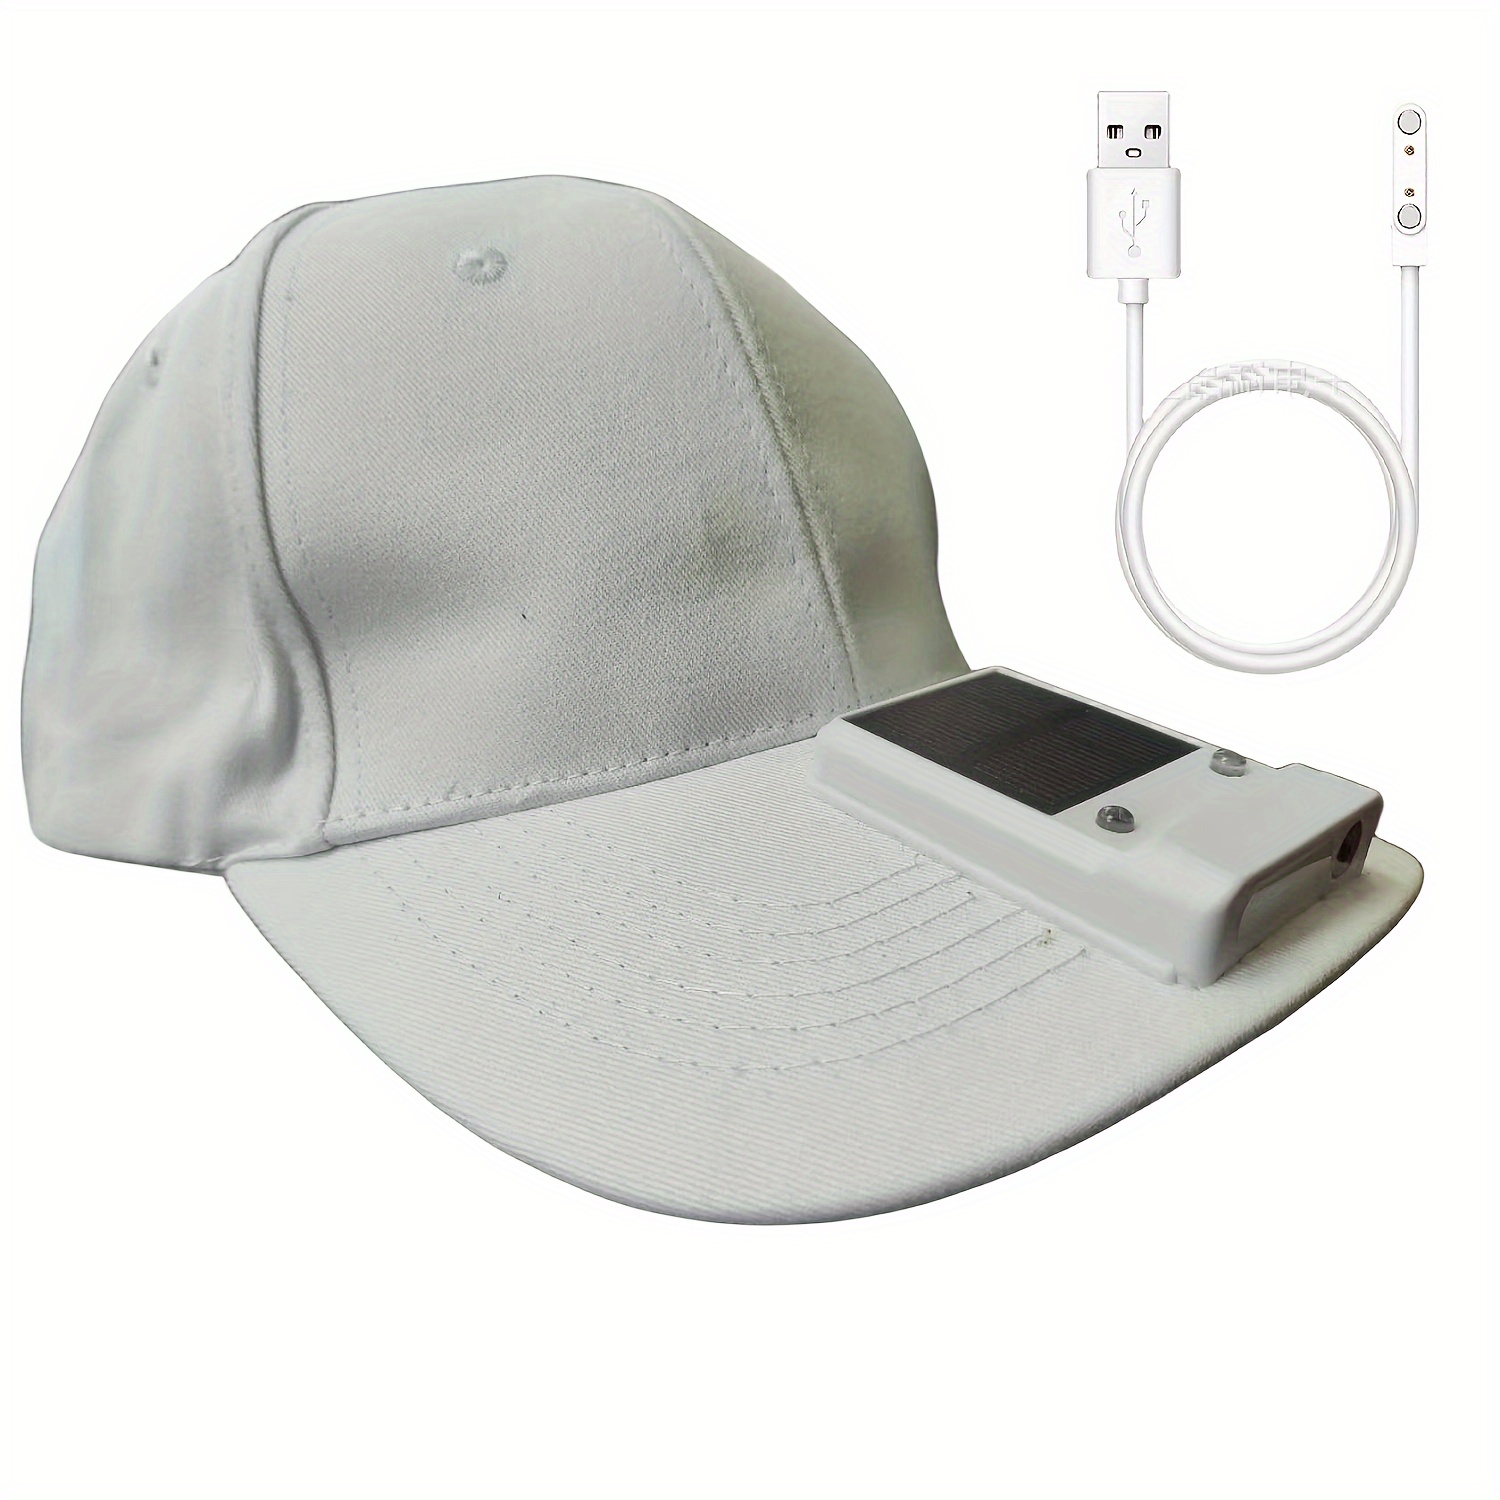 LED Hat BaseballHat Camo/Black 5 LED Hat Light Ultra Bright LED Fishing Hat Hands Free